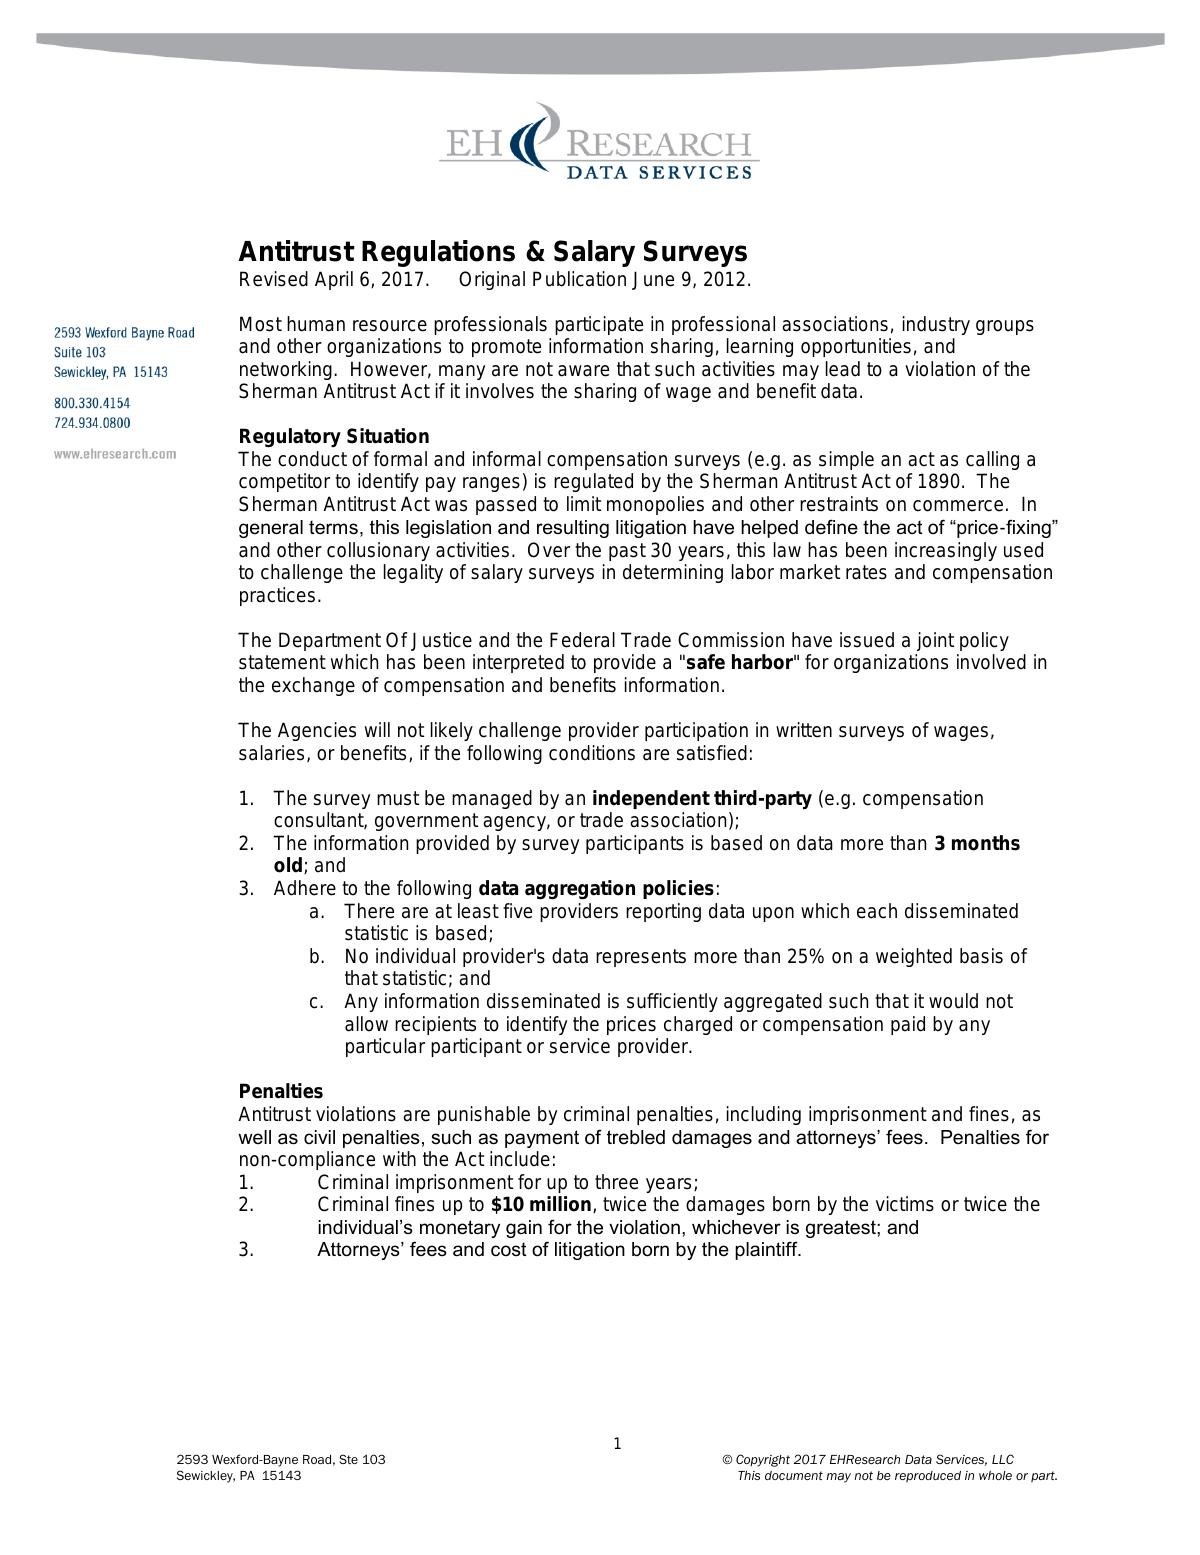 AntiTrust Regulations and Salary Surveys